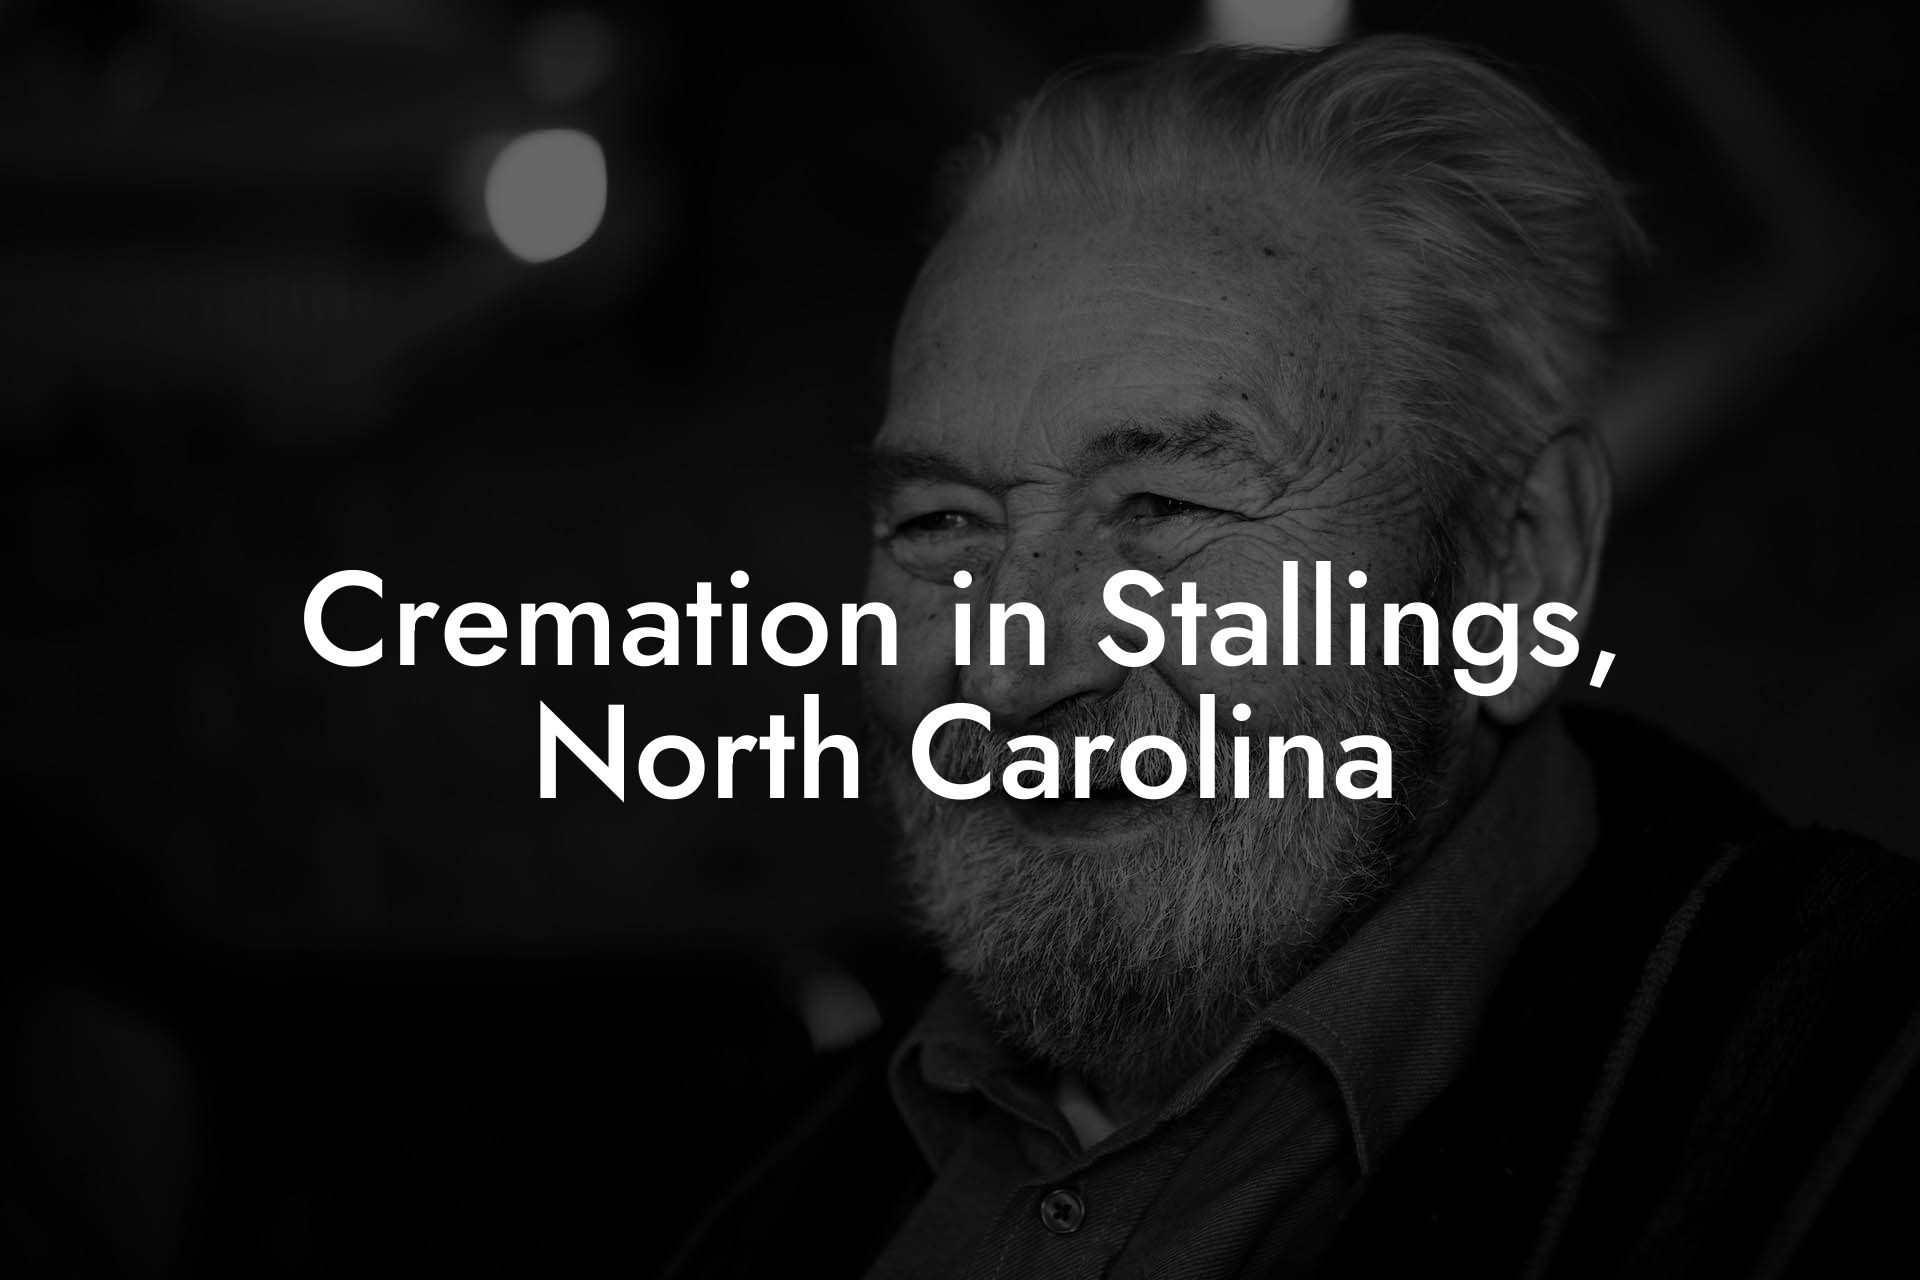 Cremation in Stallings, North Carolina